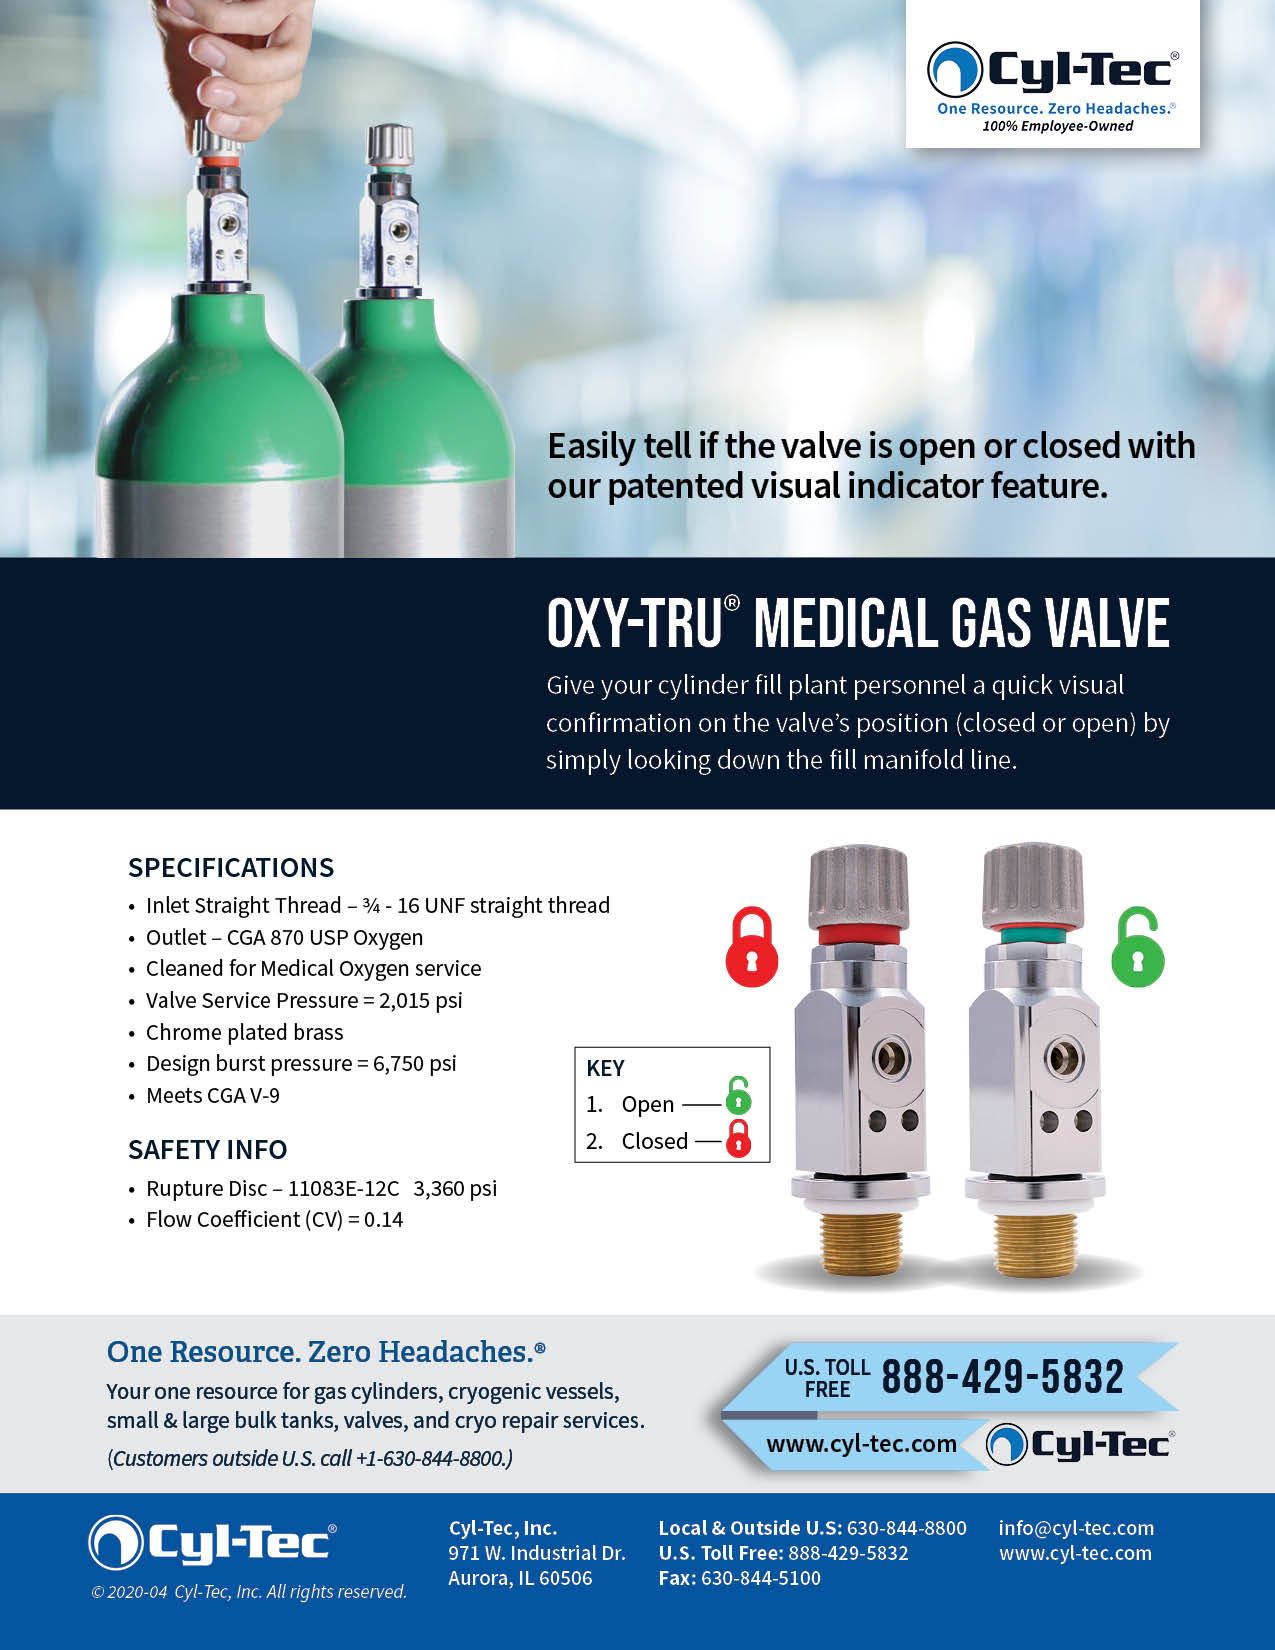 OxyTru Medical Gas Valves